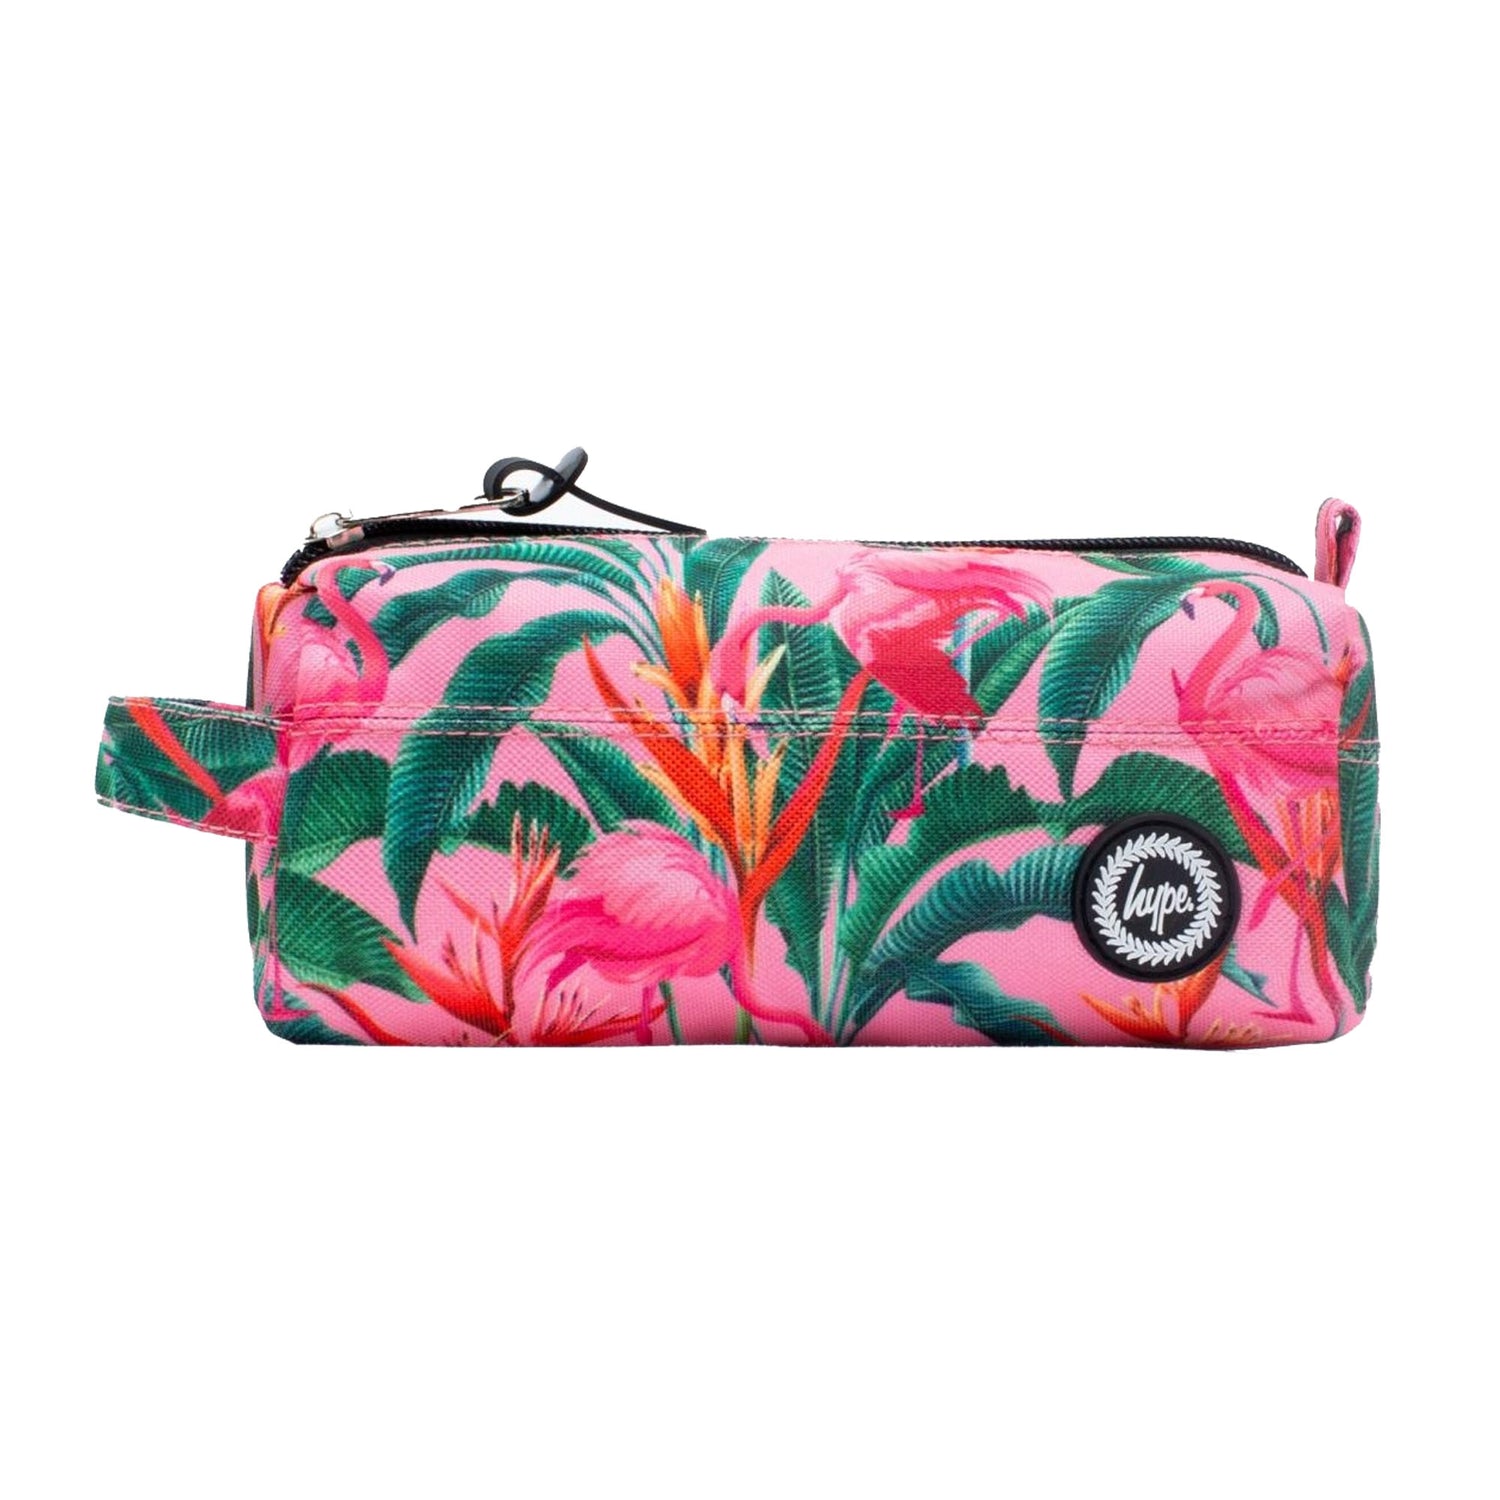 Hype Flamingo Rainforest Pencil Case | Discounts on great Brands